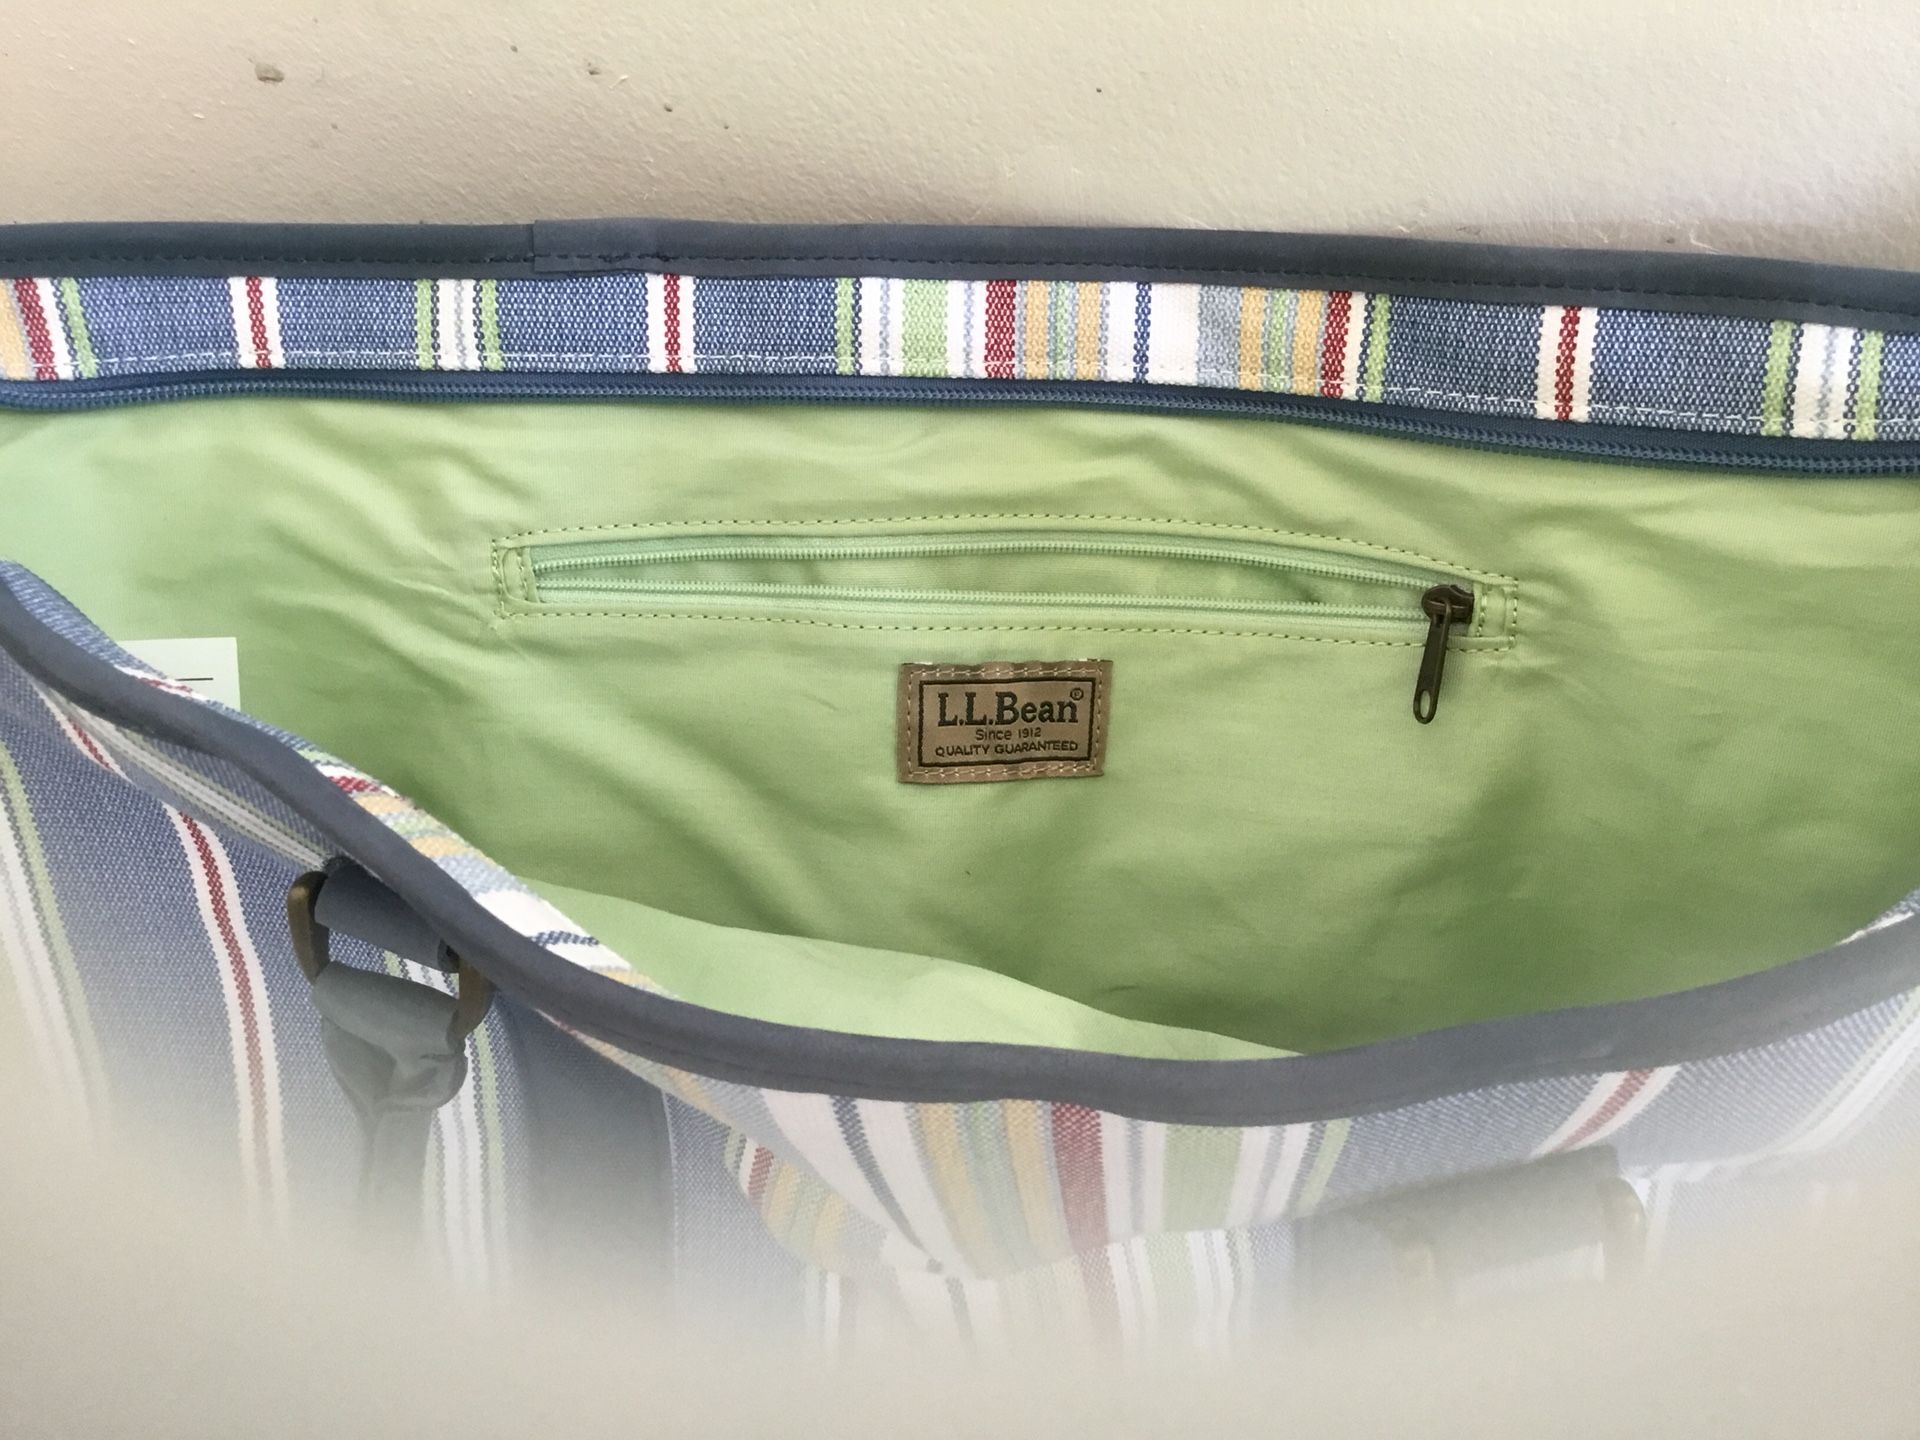 LL Bean Bag - never used